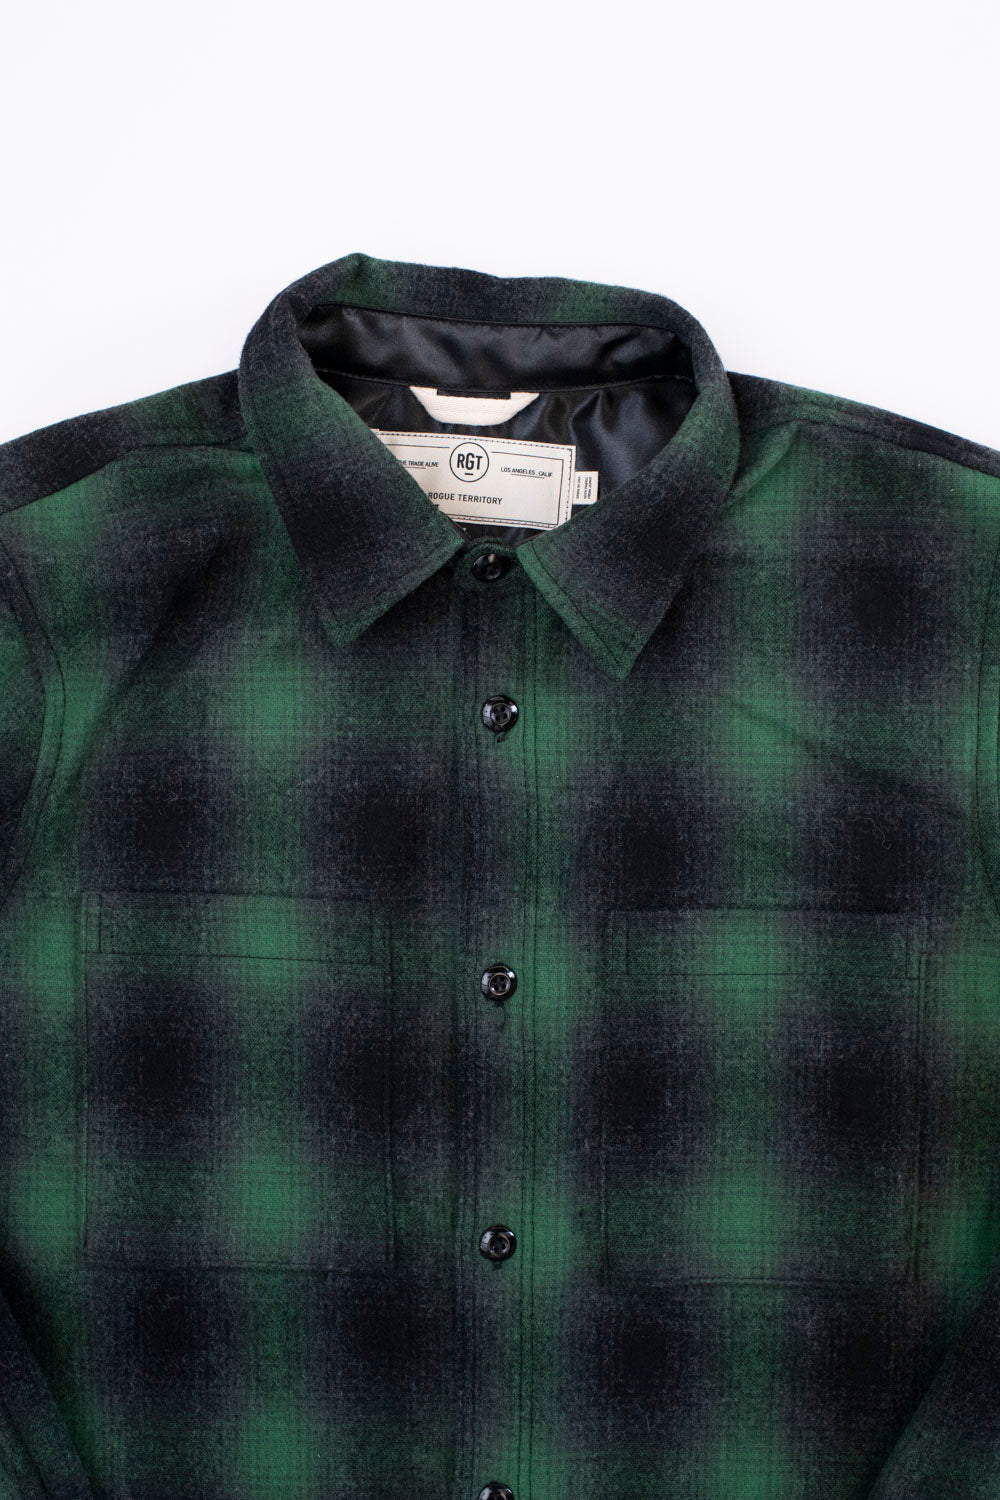 Utility Shirt Plaid Wool - Ombré Green